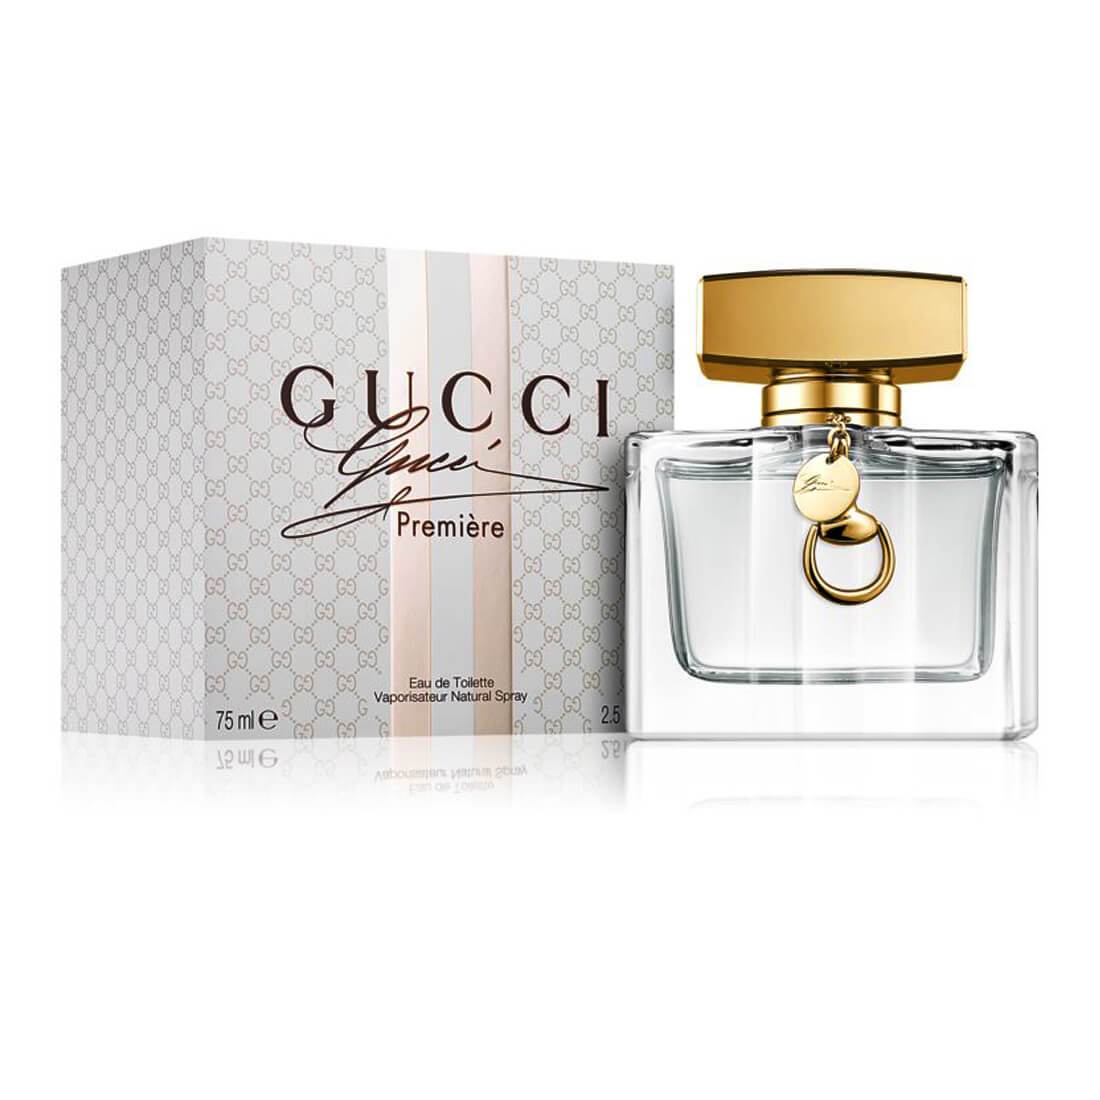 Gucci Premier EDT Perfume For Women - 75ml